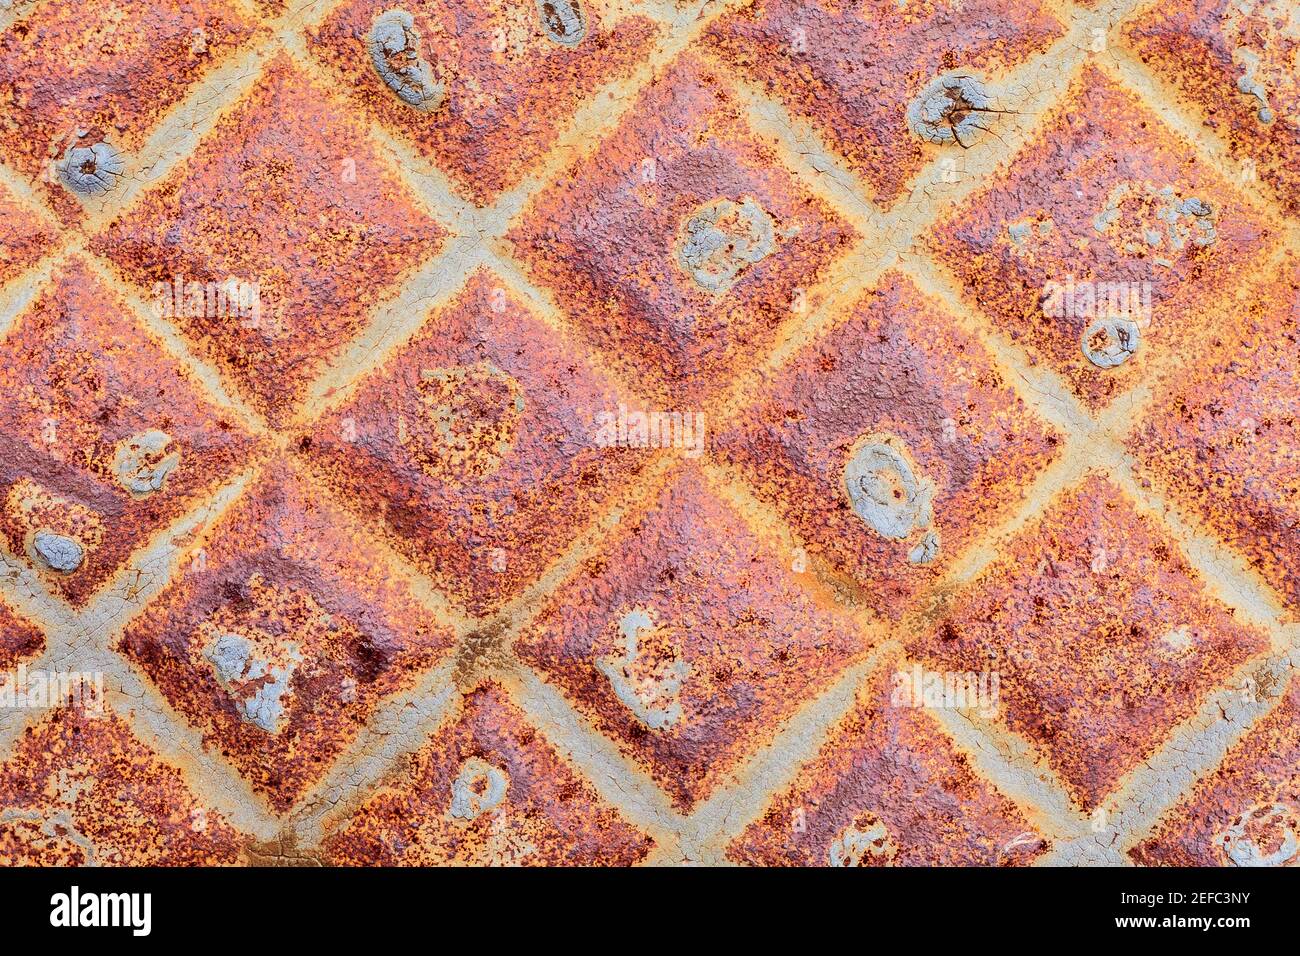 Close up image of a weathered manhole, showing its symmetrical pattern. Stock Photo